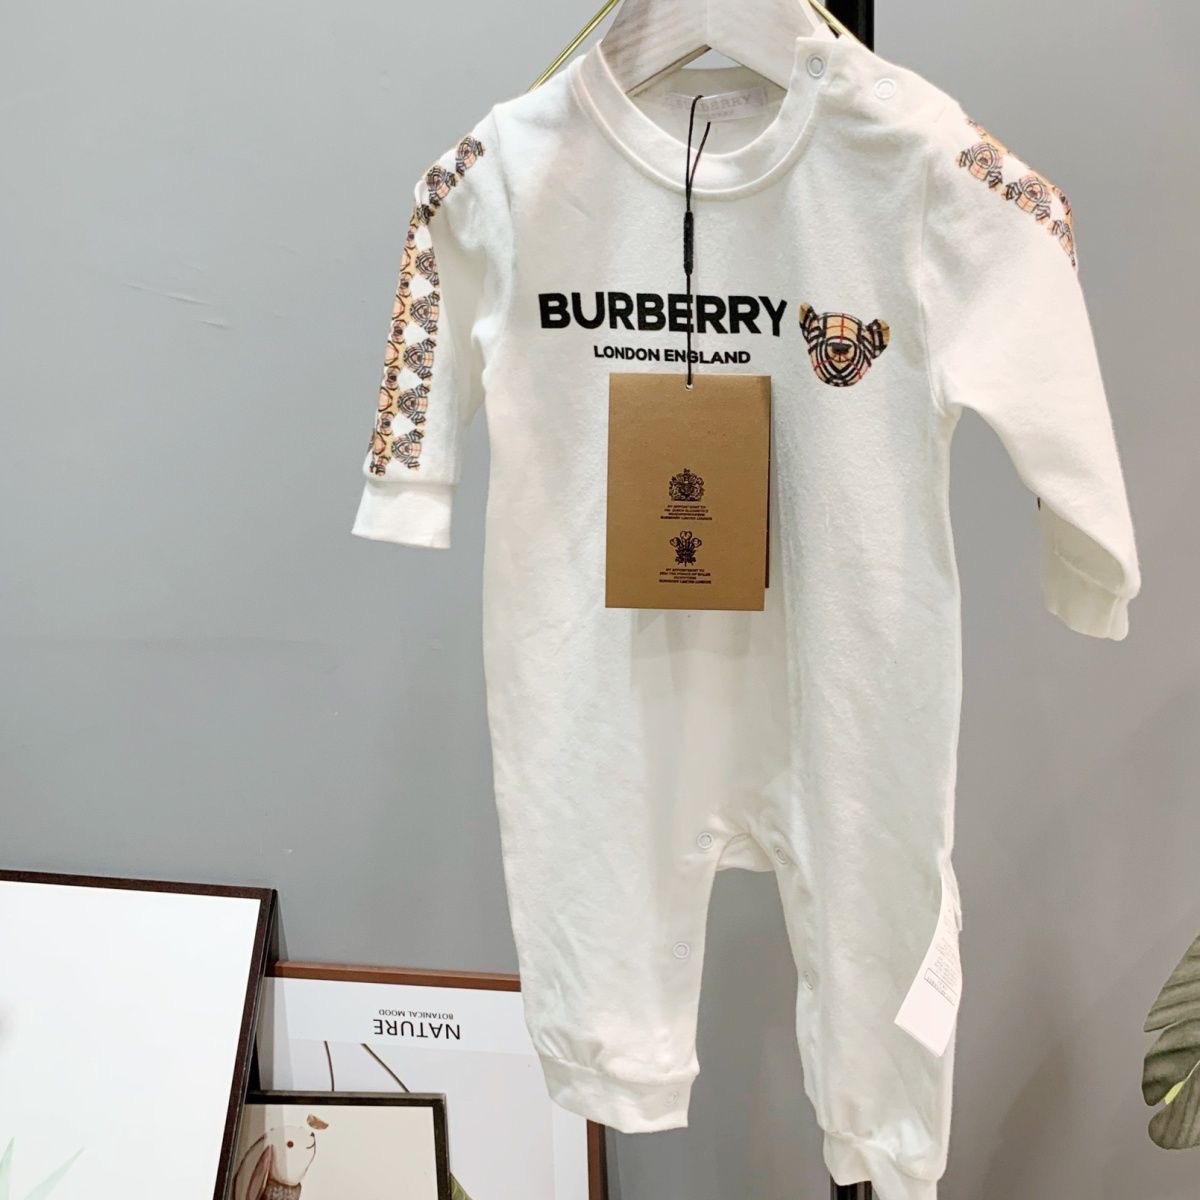 BVRBERRY BABYS CLOTHING